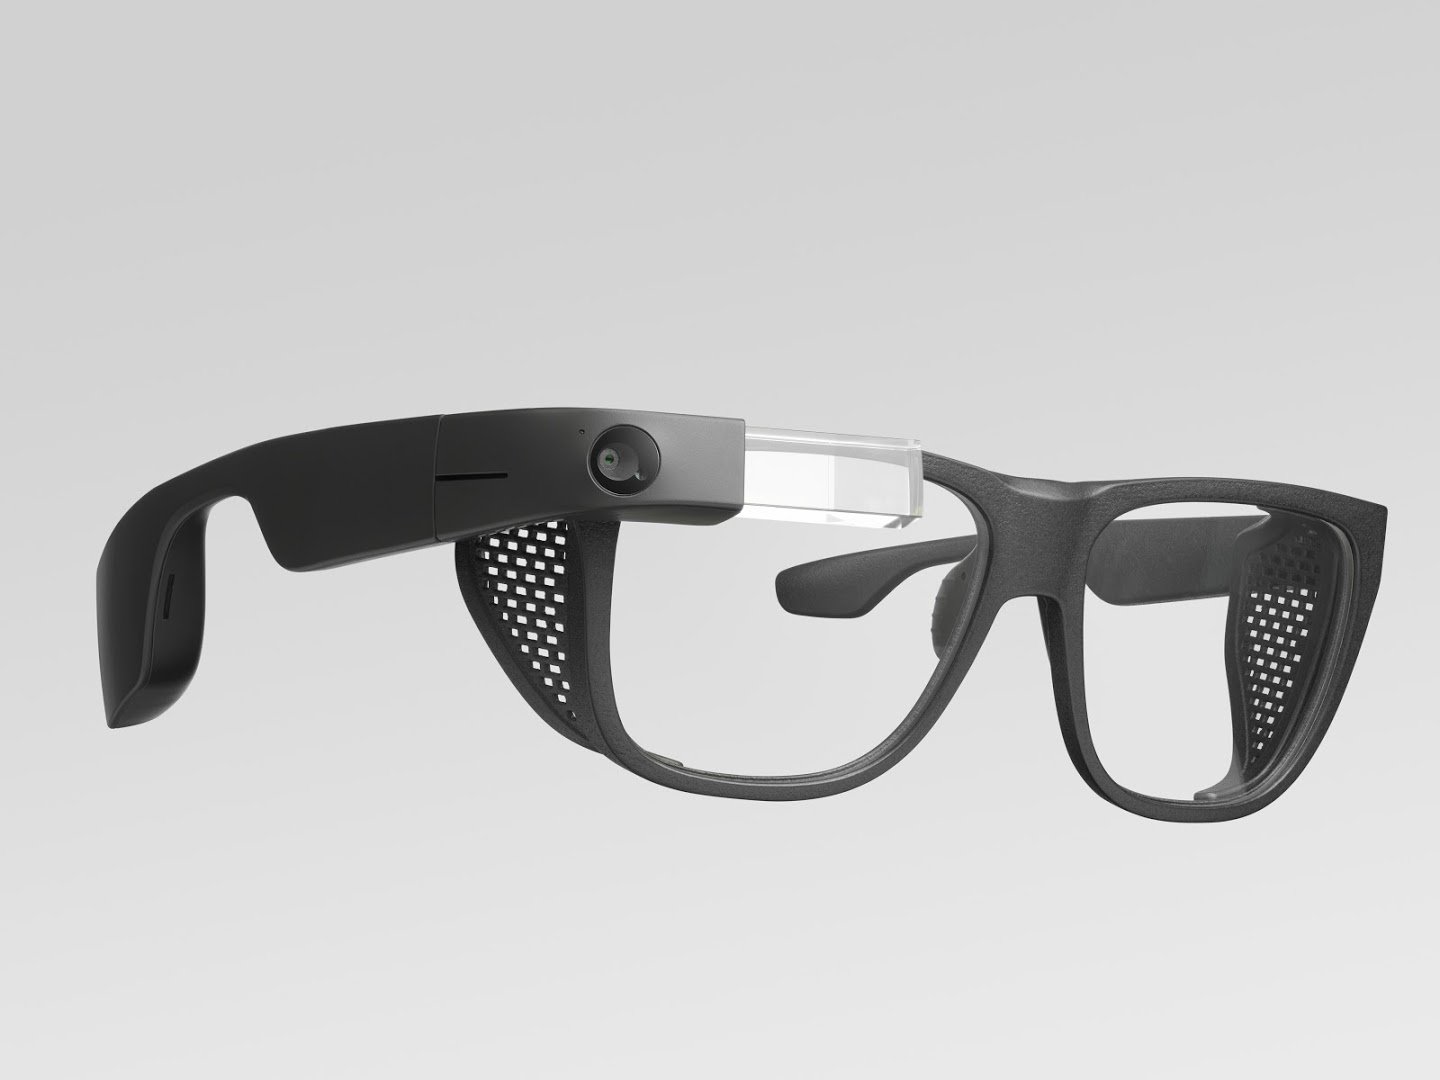 「Google Glass」新モデル、大幅アップデートし999ドルで発売へ